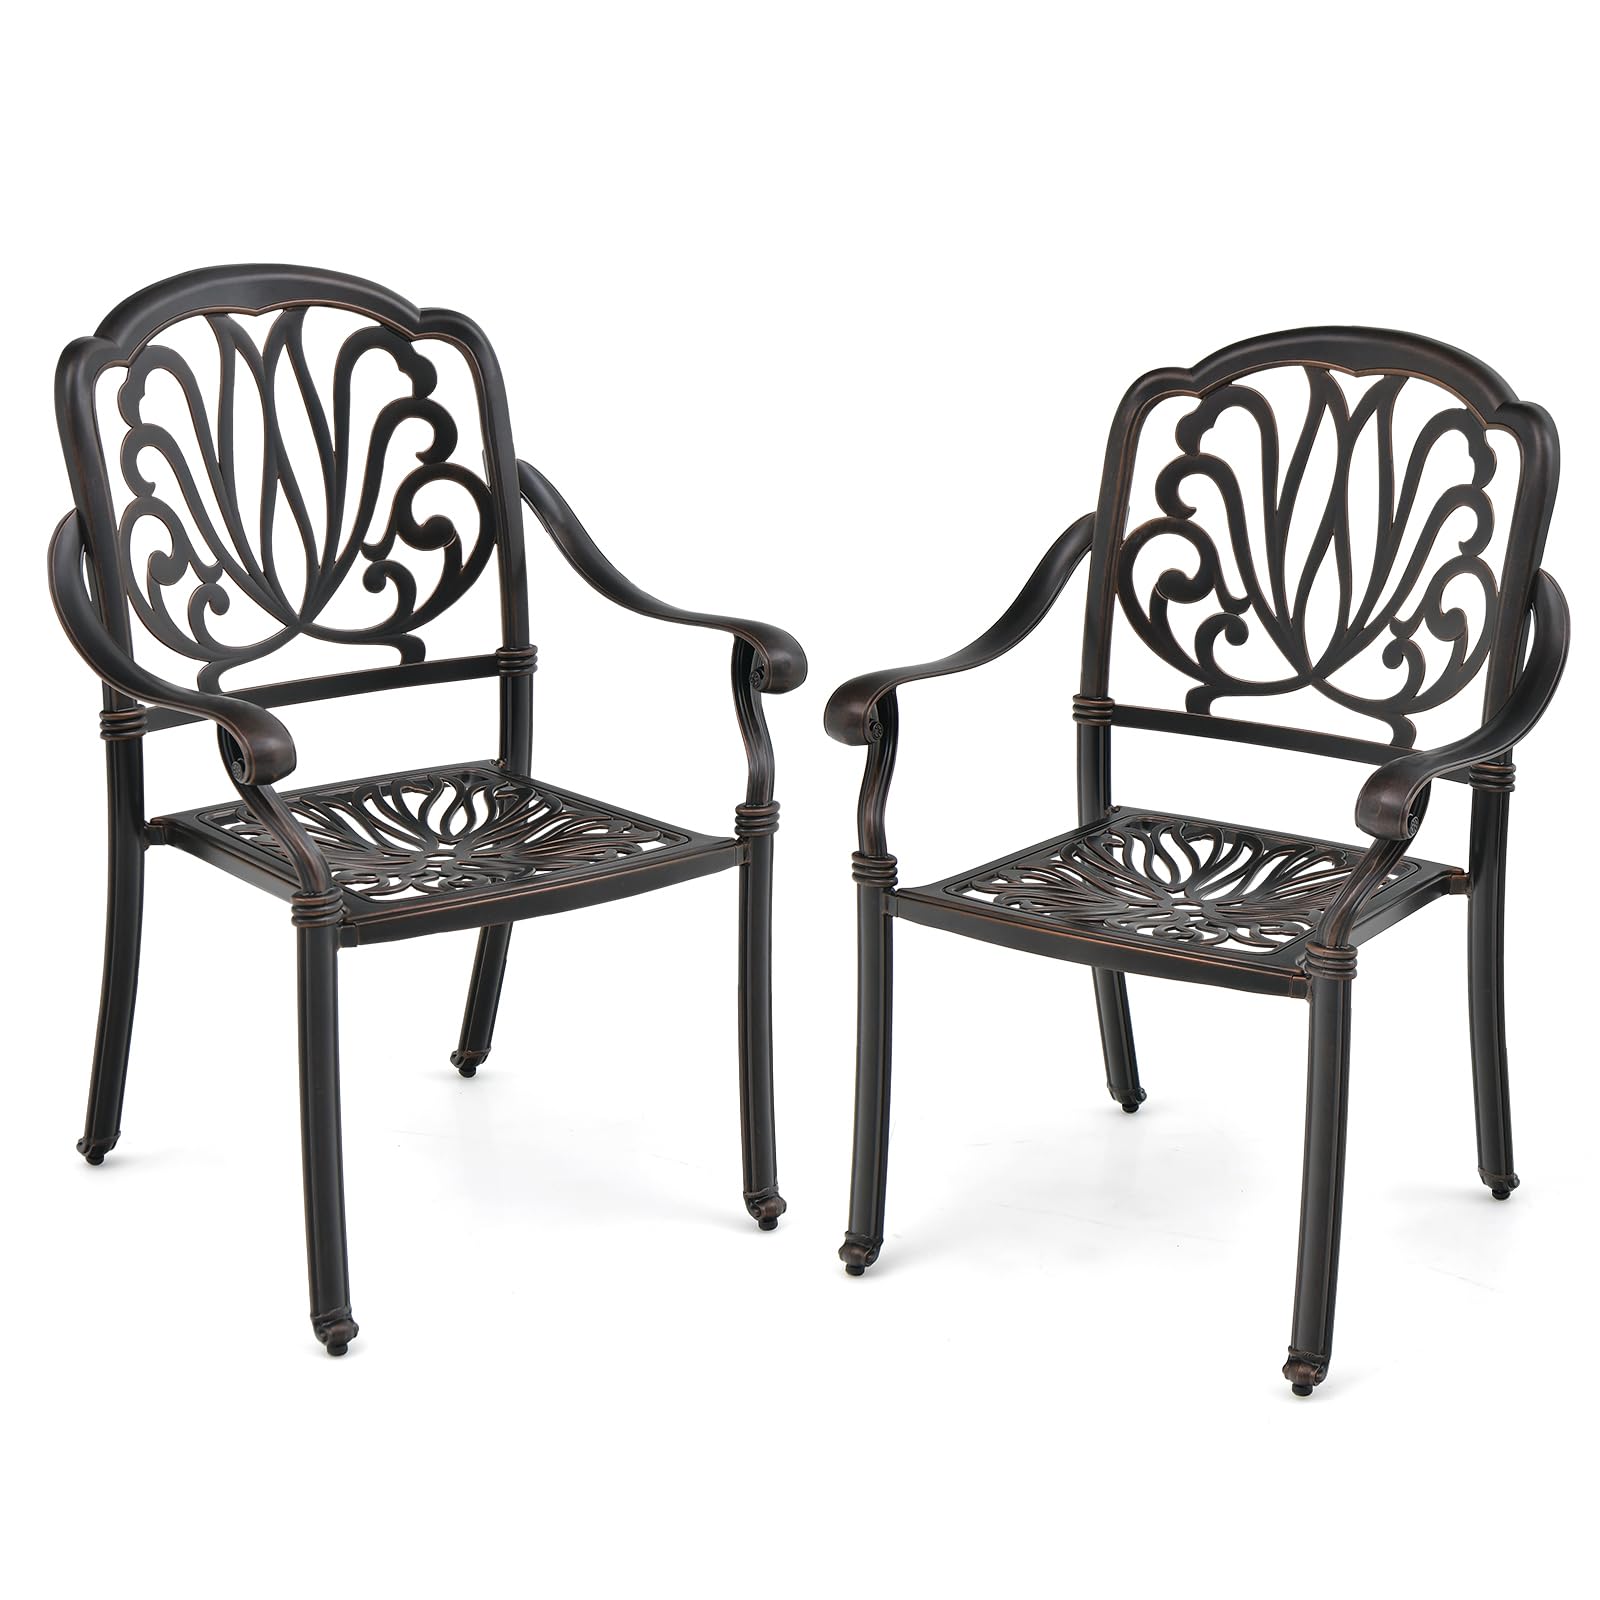 Giantex Patio Chairs Set of 2, Set of 4